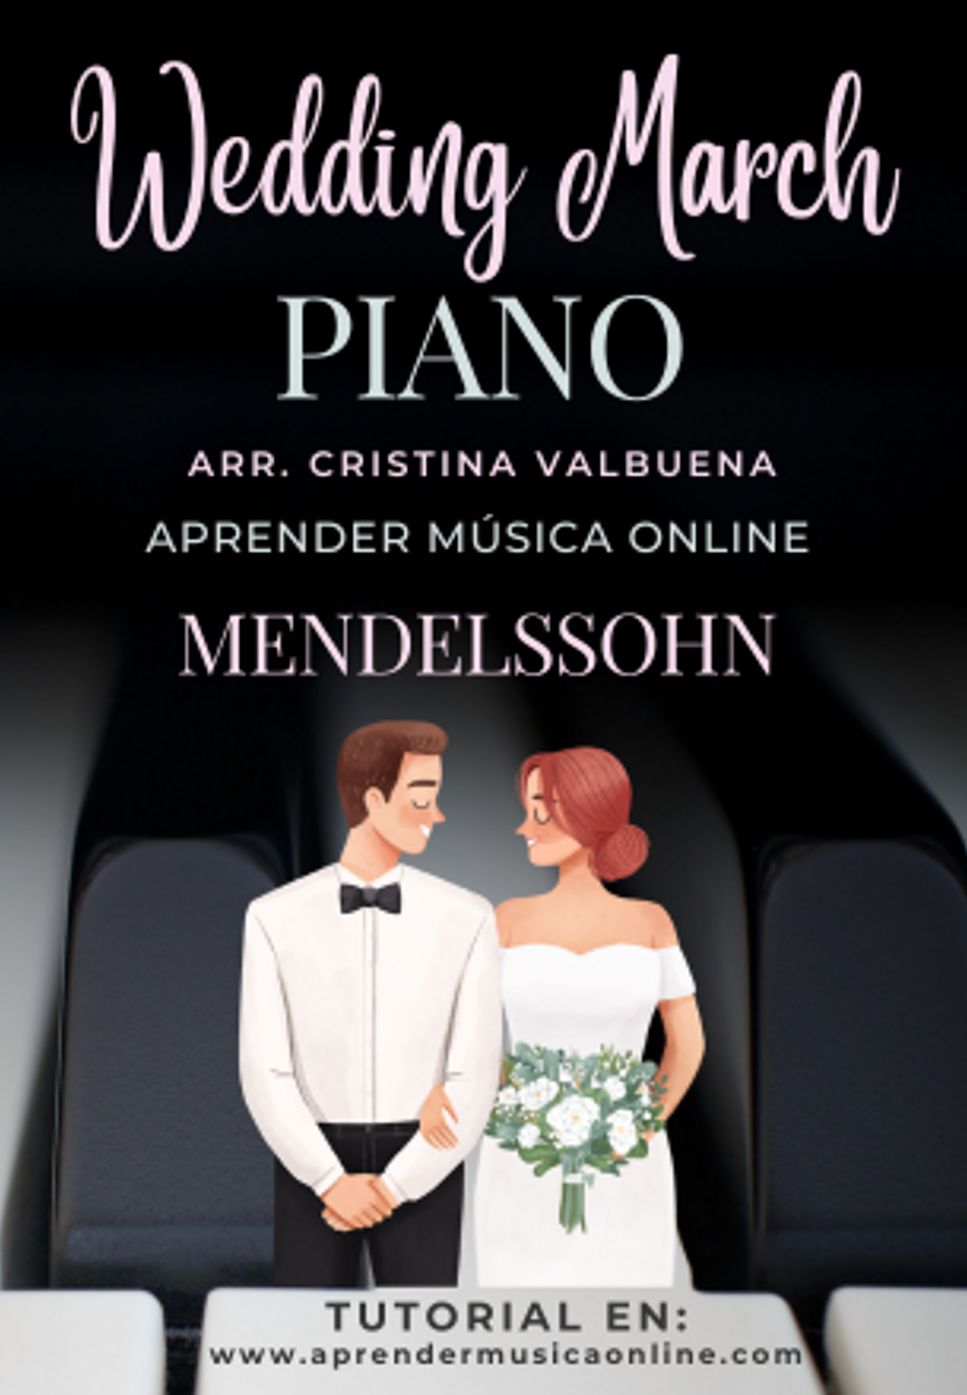 Mendelssohn - Wedding March by Cristina Valbuena